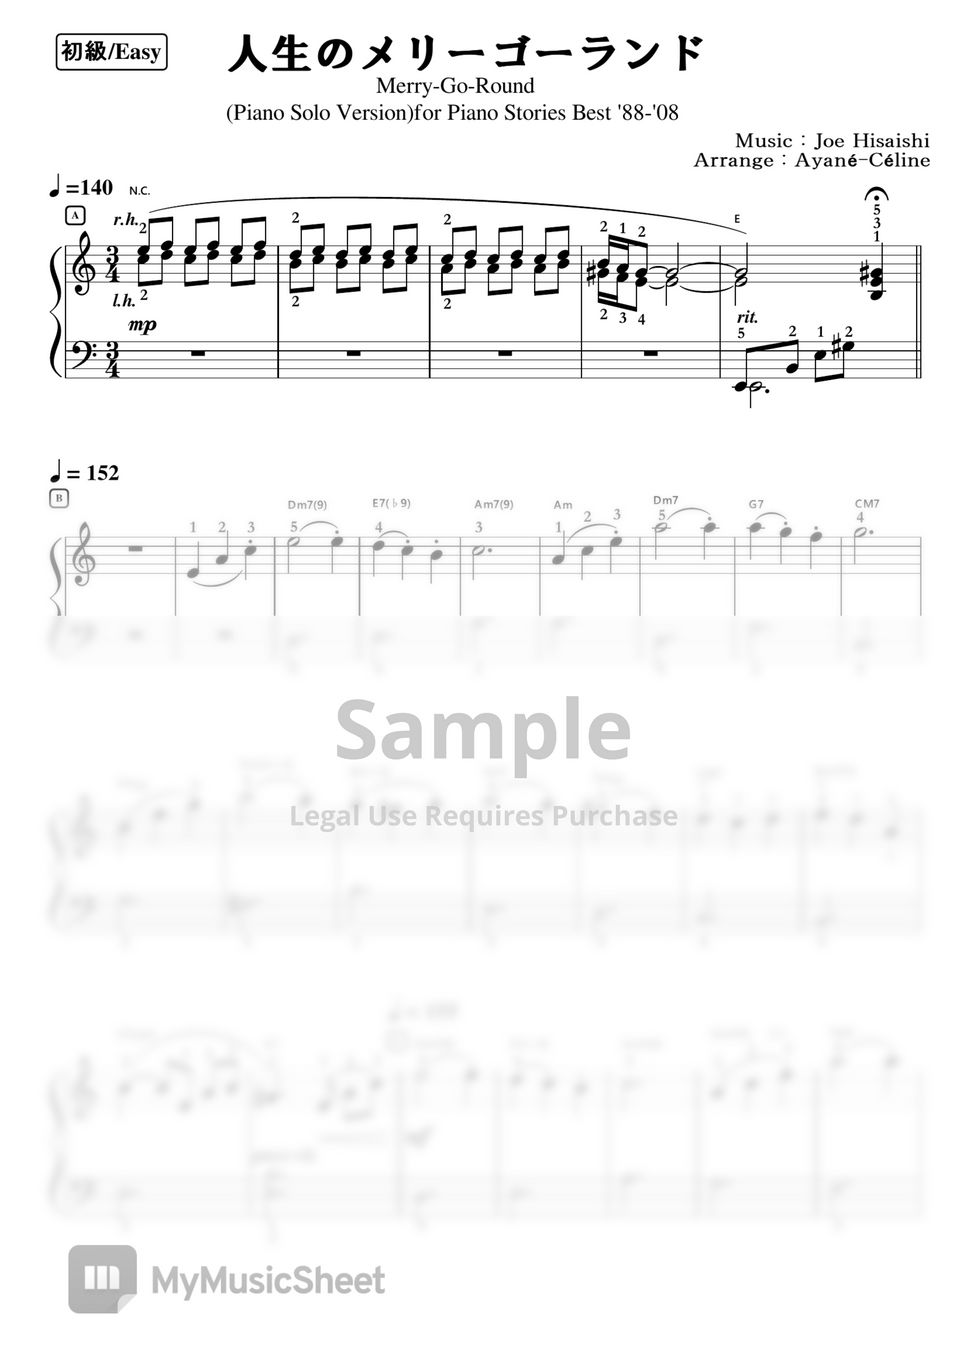 Joe Hisaishi - Merry-Go-Round (Piano Solo( Easy )) by Ayané-Céline